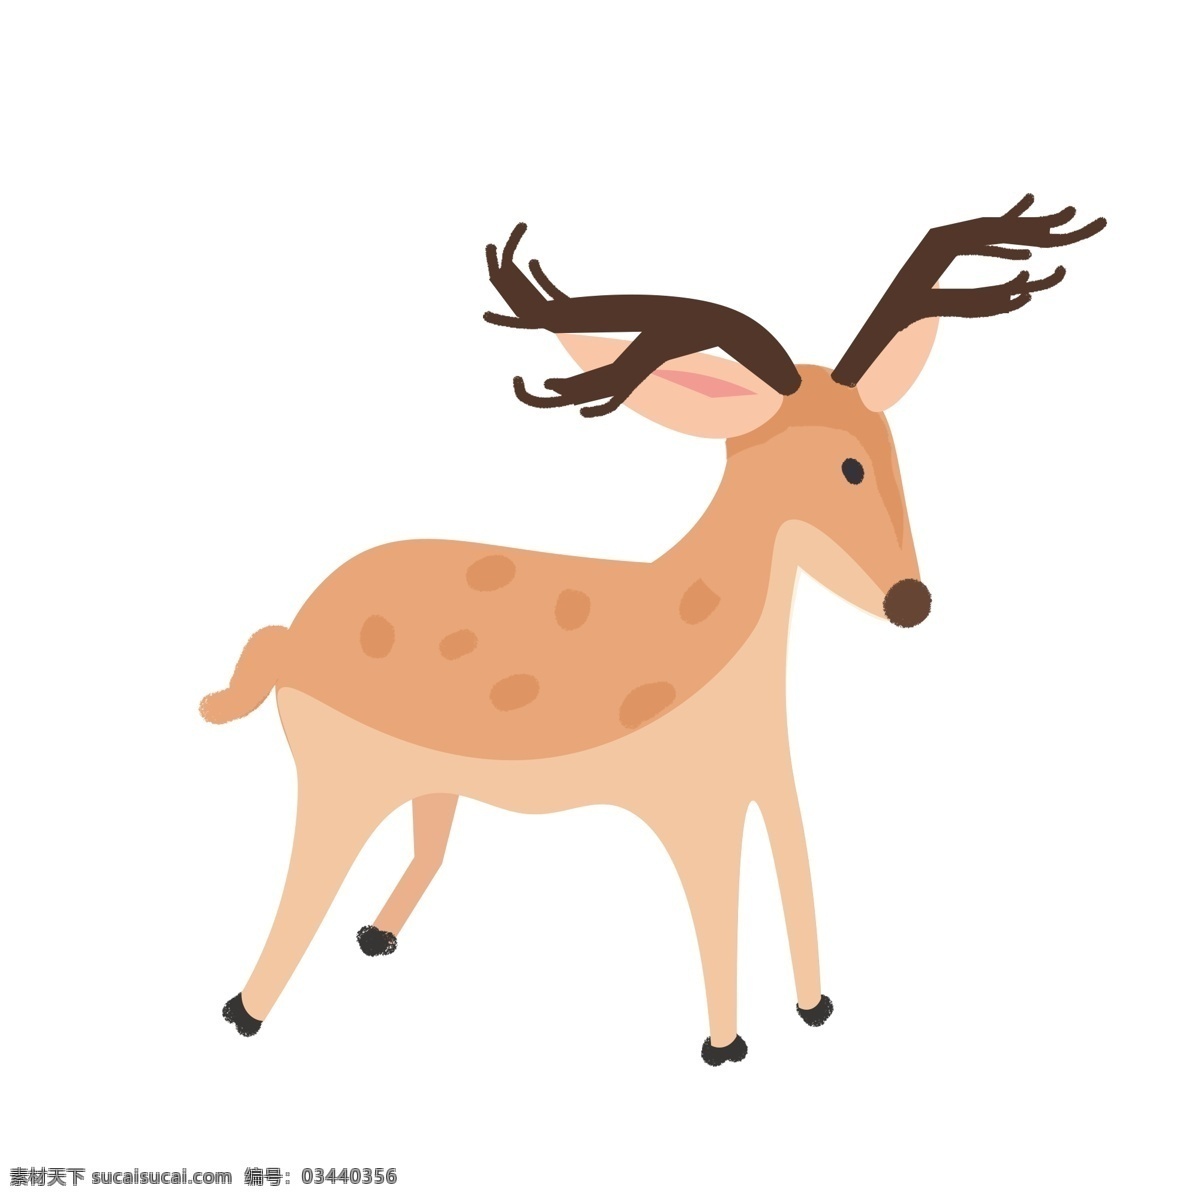 q 版 卡通 可爱 小鹿 动物 商用 元素 q版 小动物 插画设计